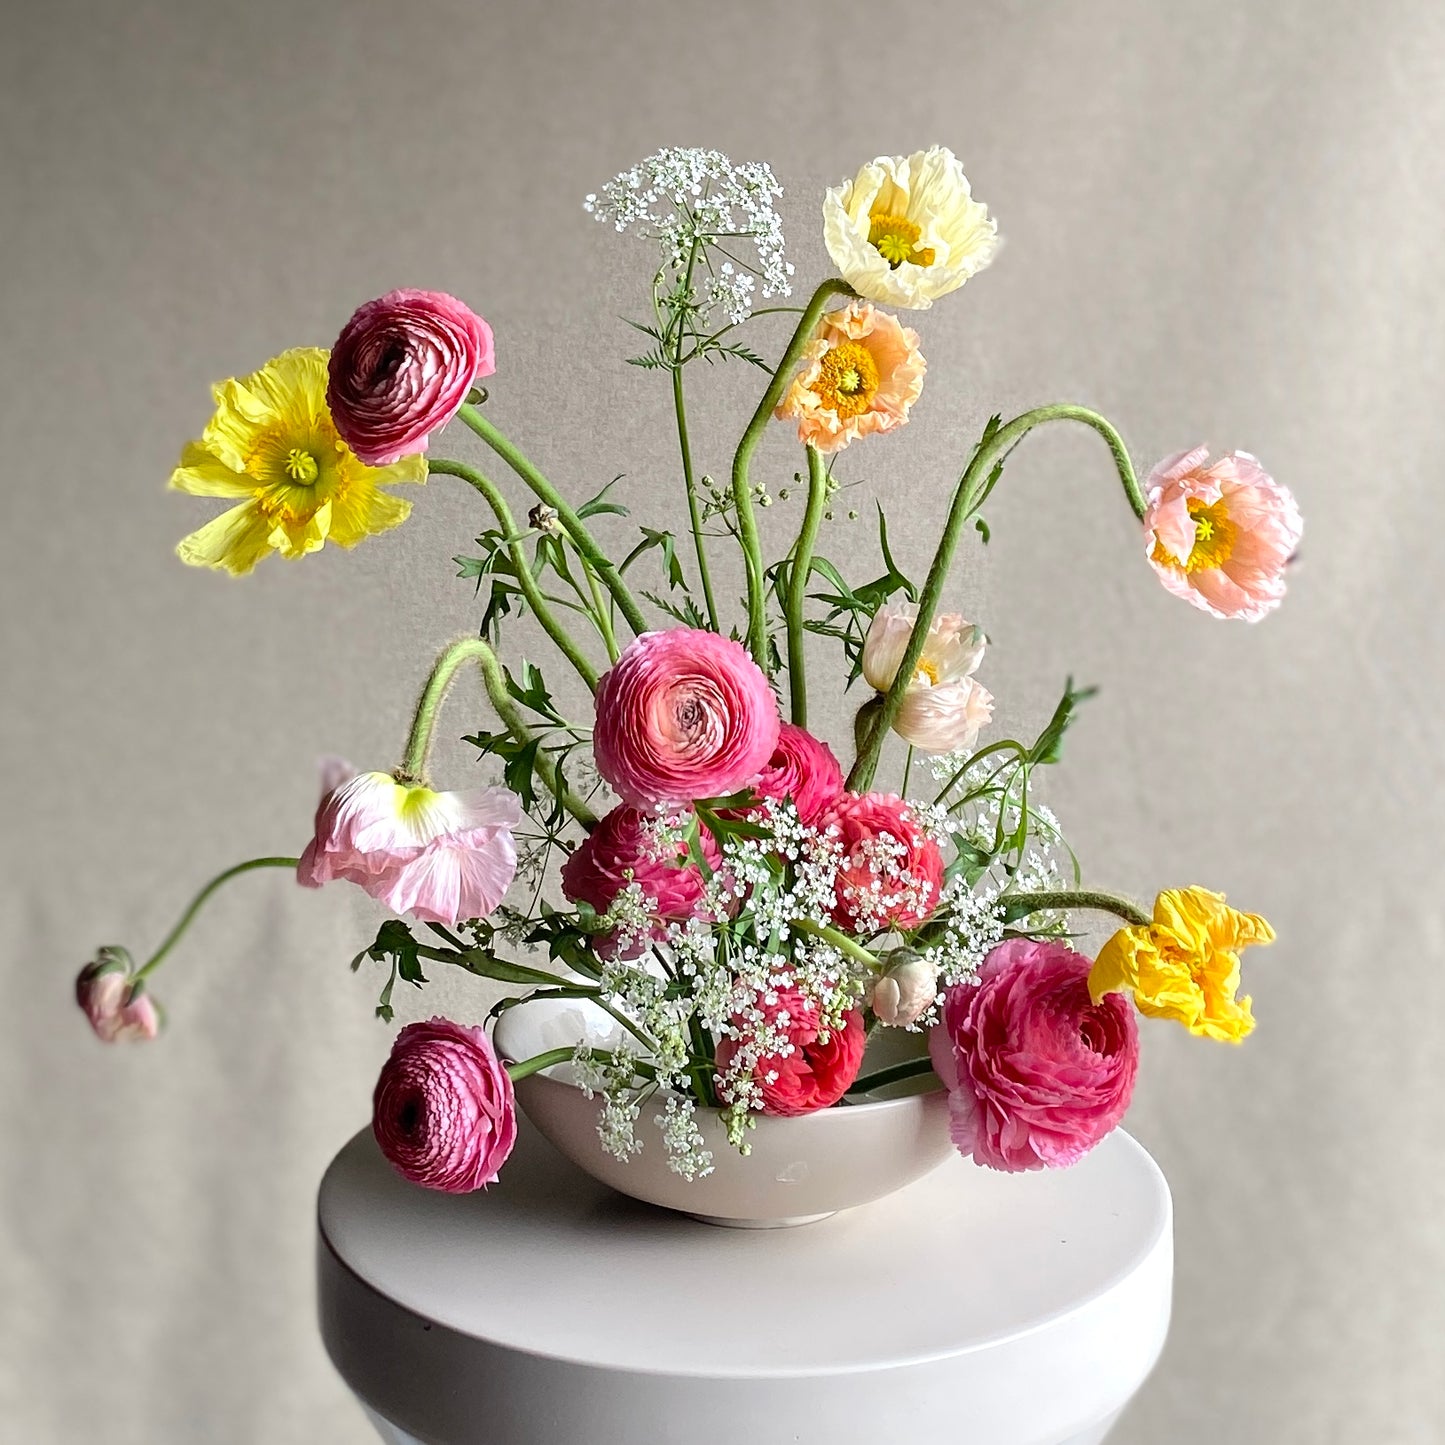 Floral Kenzan Workshop - Saturday 1st June